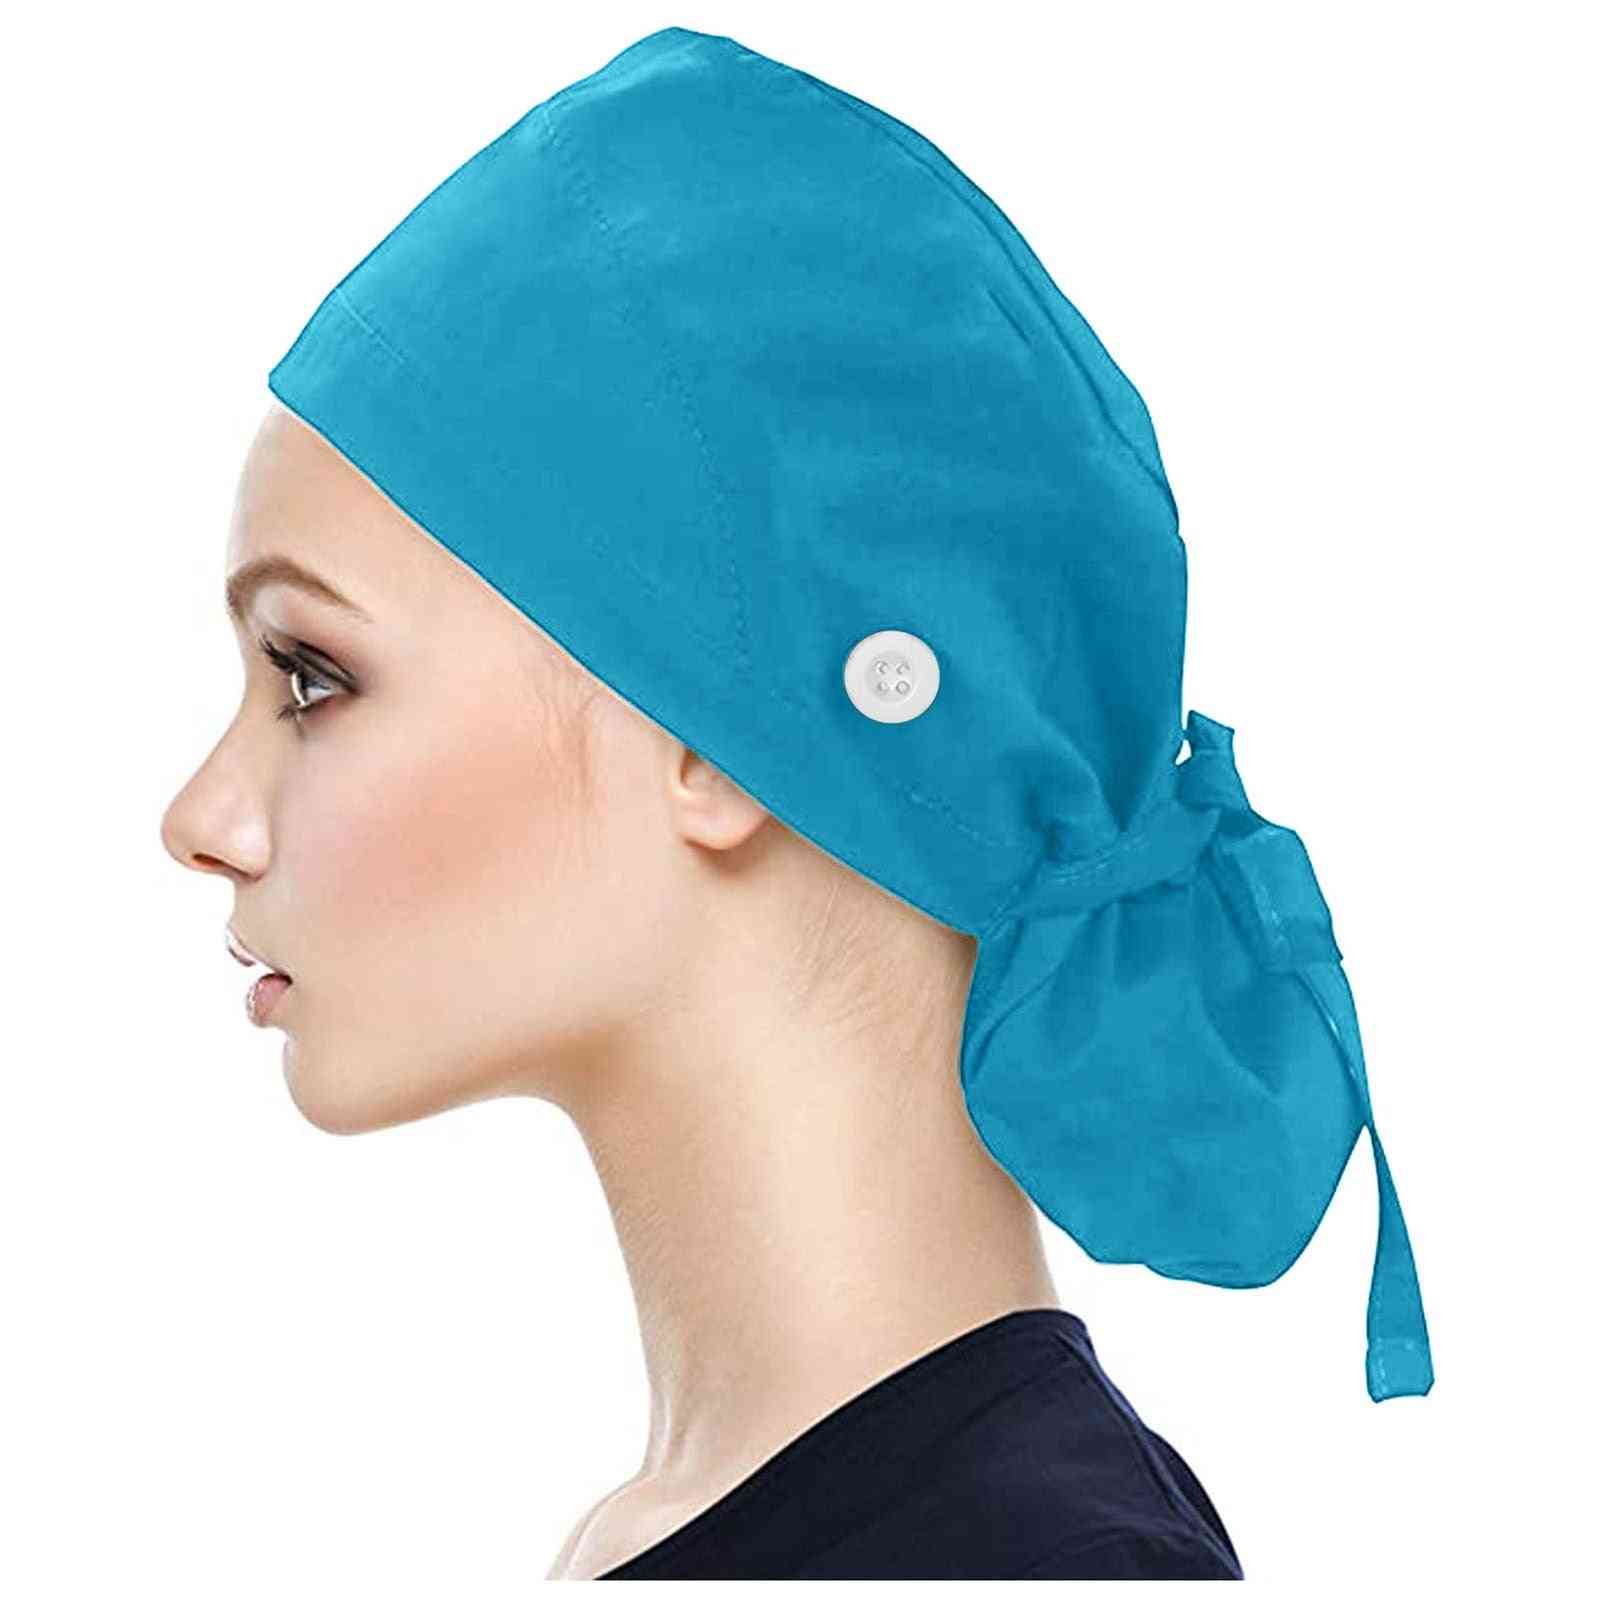 Unisex Surgical Cap, Women Long Hair Scrubs Anti-dirty Hats